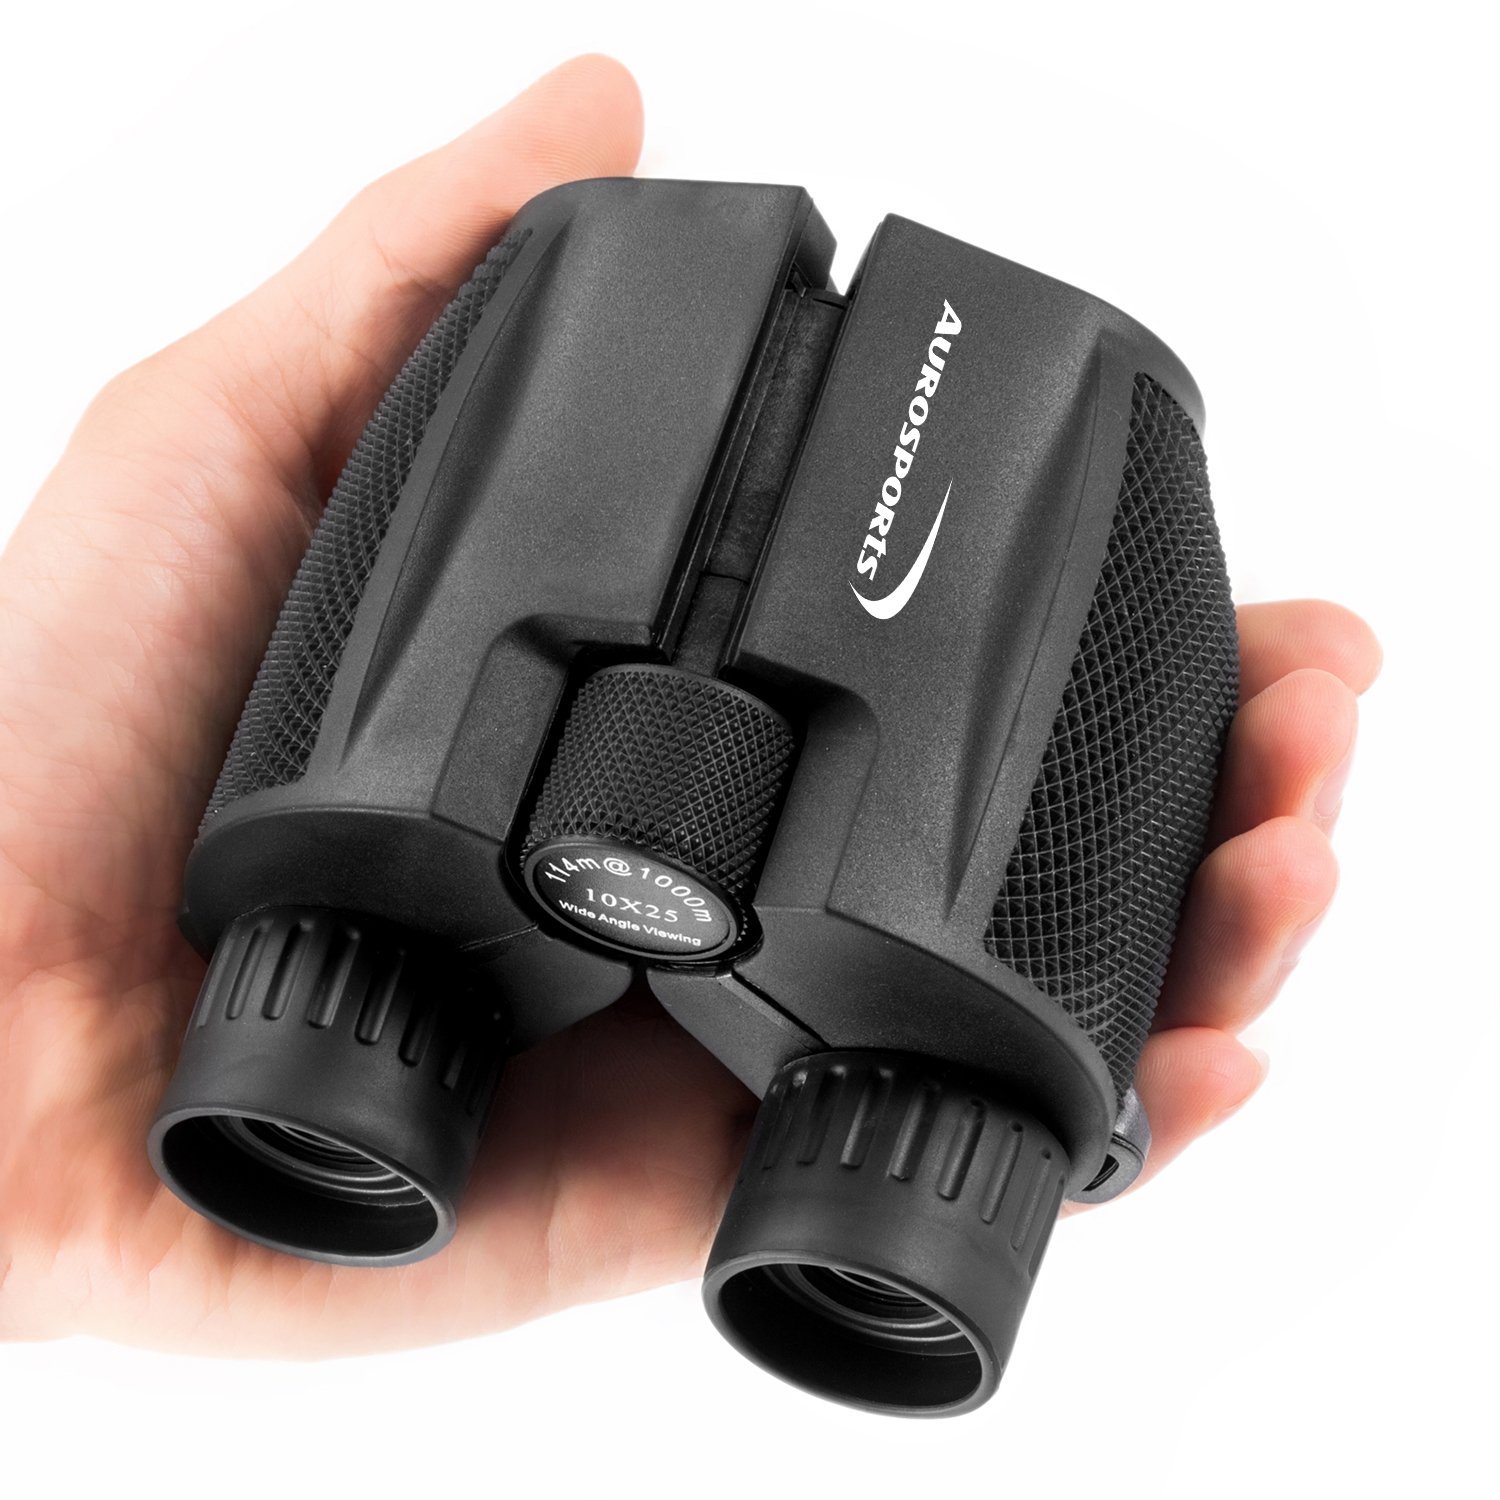 Amazon.com : Aurosports 10x25 Folding High Powered Binoculars With ...